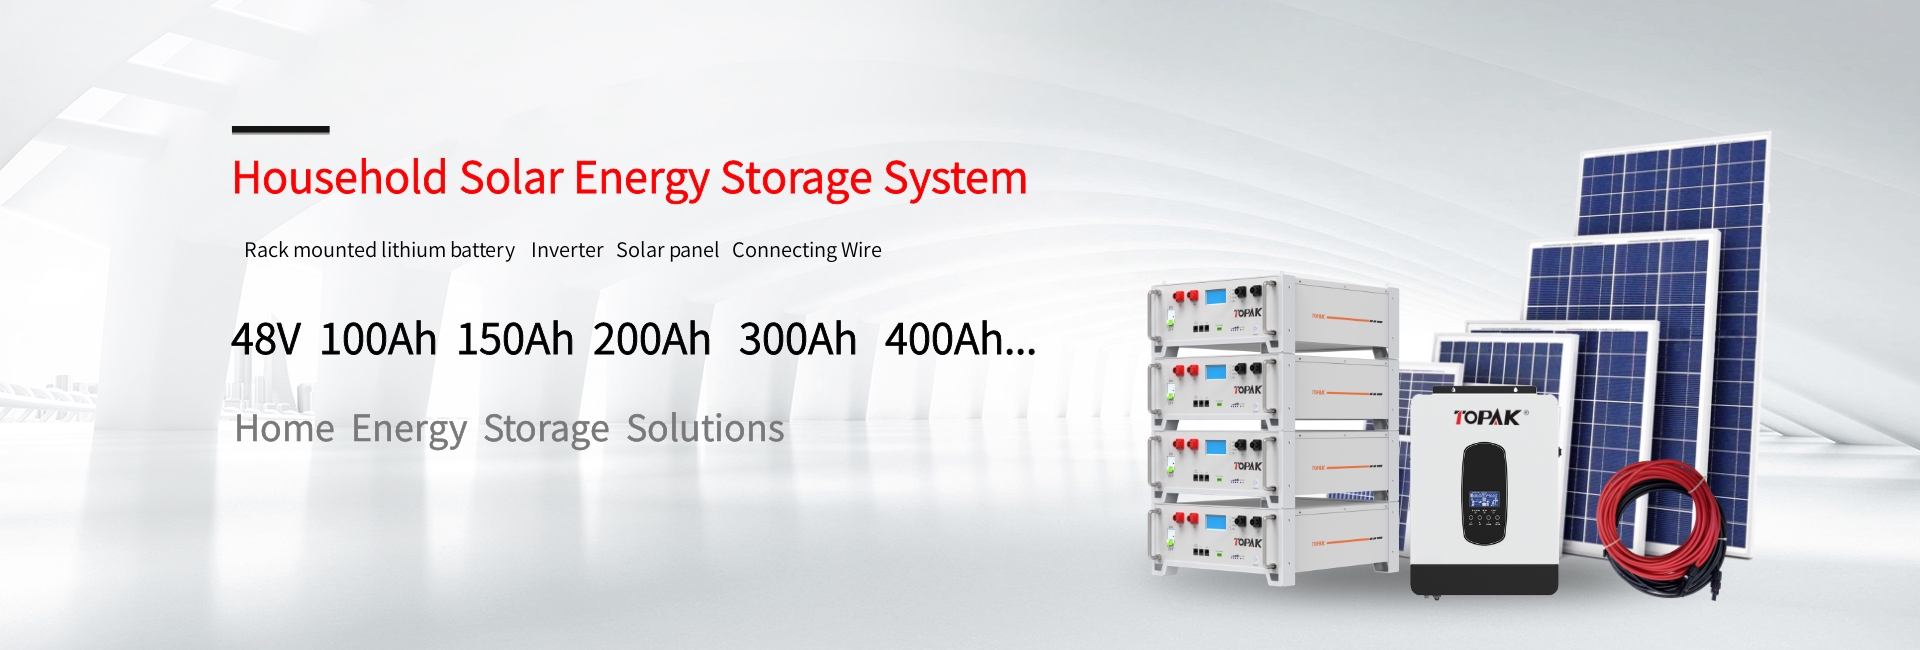 Home Energy Storage system